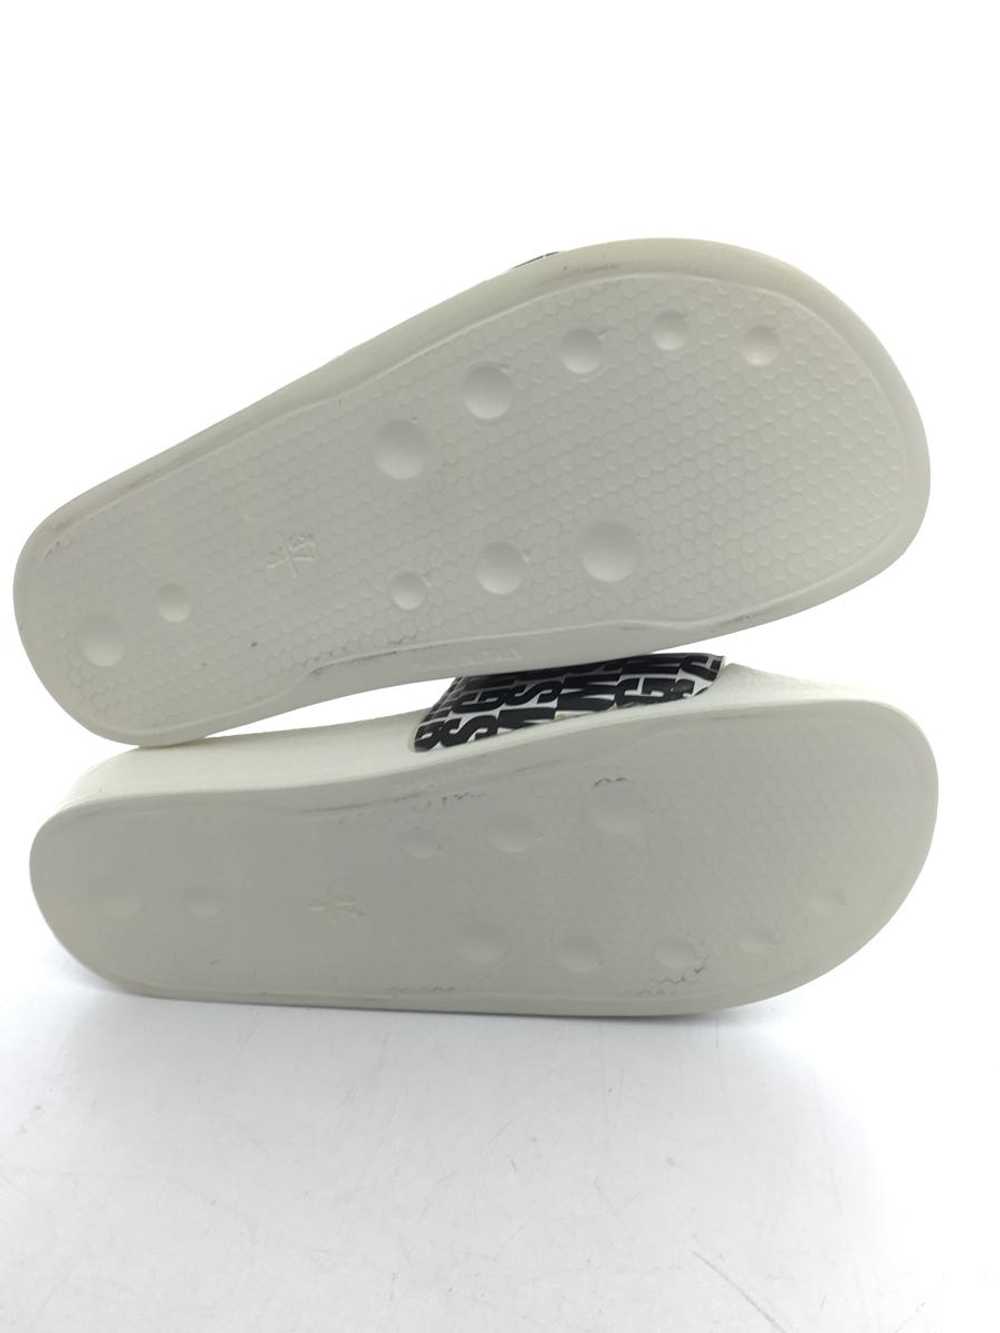 Msgm Sandals/37/White/Pool-Slide Shoes BLp96 - image 4